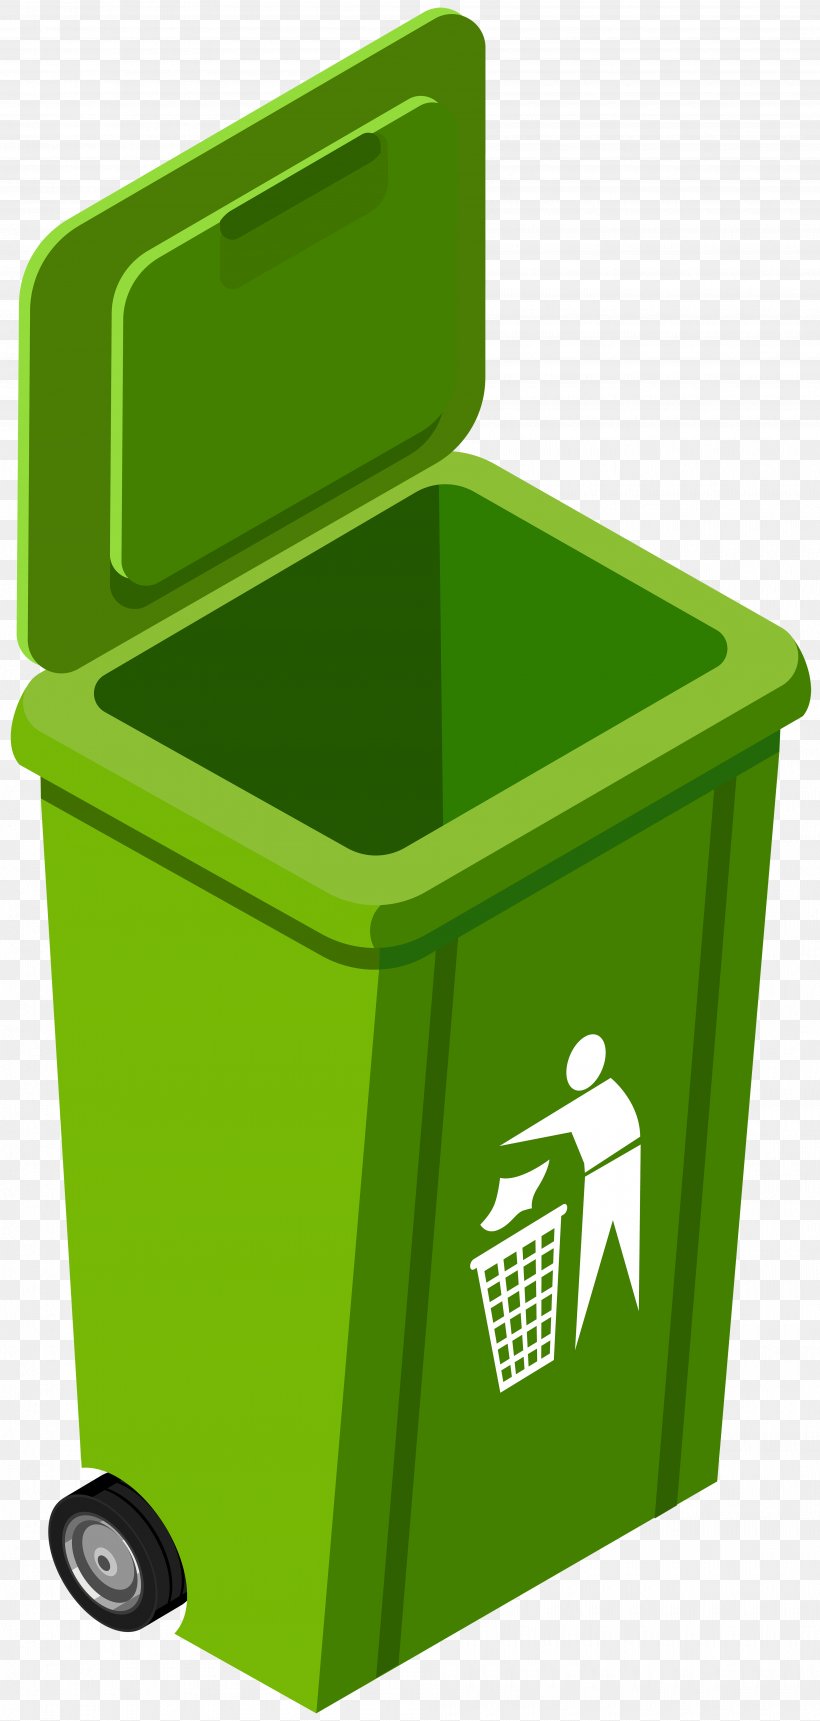 Rubbish Bins & Waste Paper Baskets Recycling Bin Clip Art, PNG, 3810x8000px, Rubbish Bins Waste Paper Baskets, Environmental Protection, Green, Plastic, Rasterisation Download Free